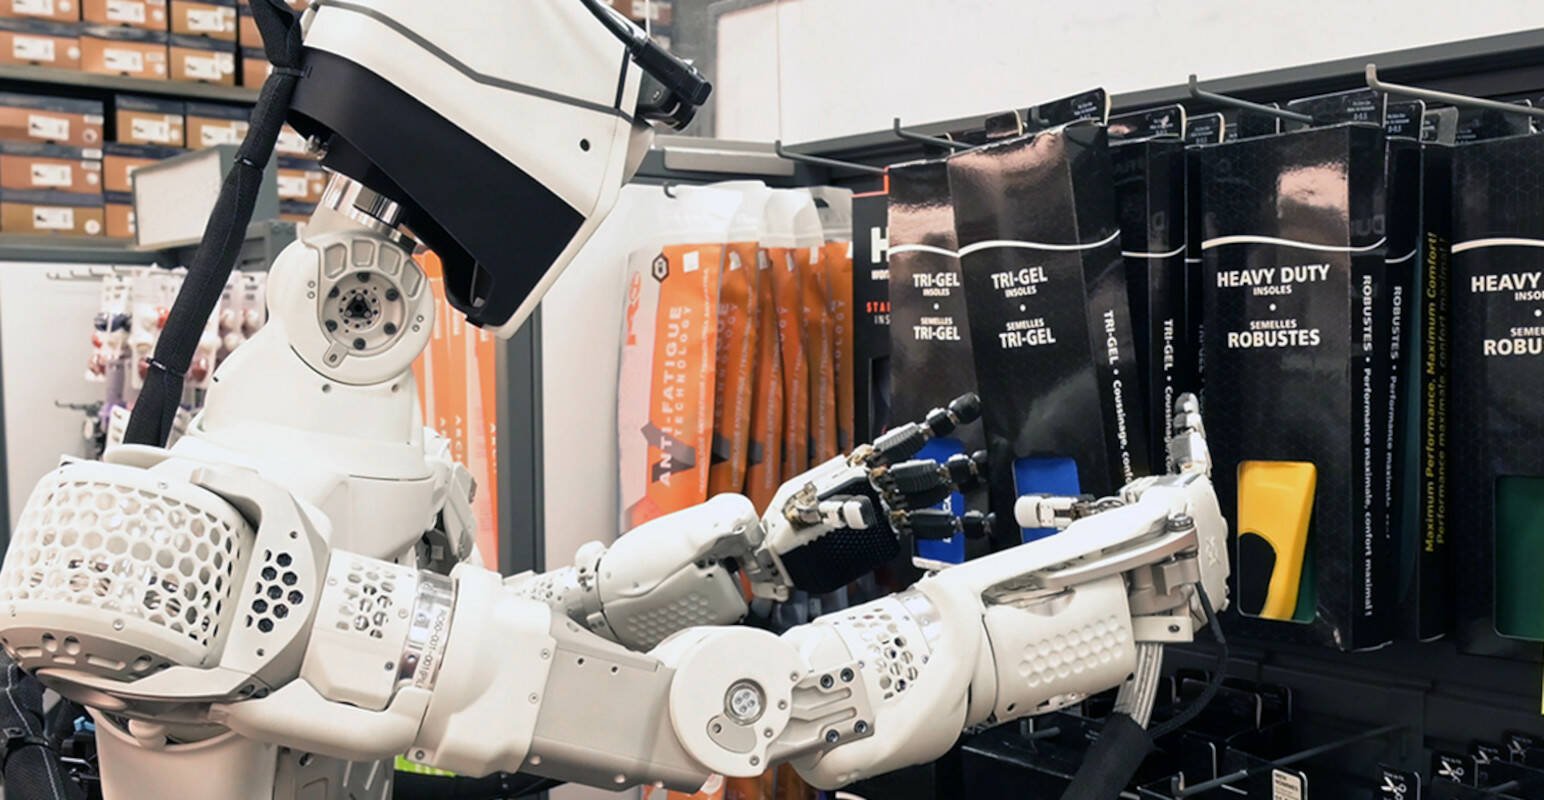 afregning renæssance Annoncør Humanoid robot takes a turn as a Mark's store clerk • The Register